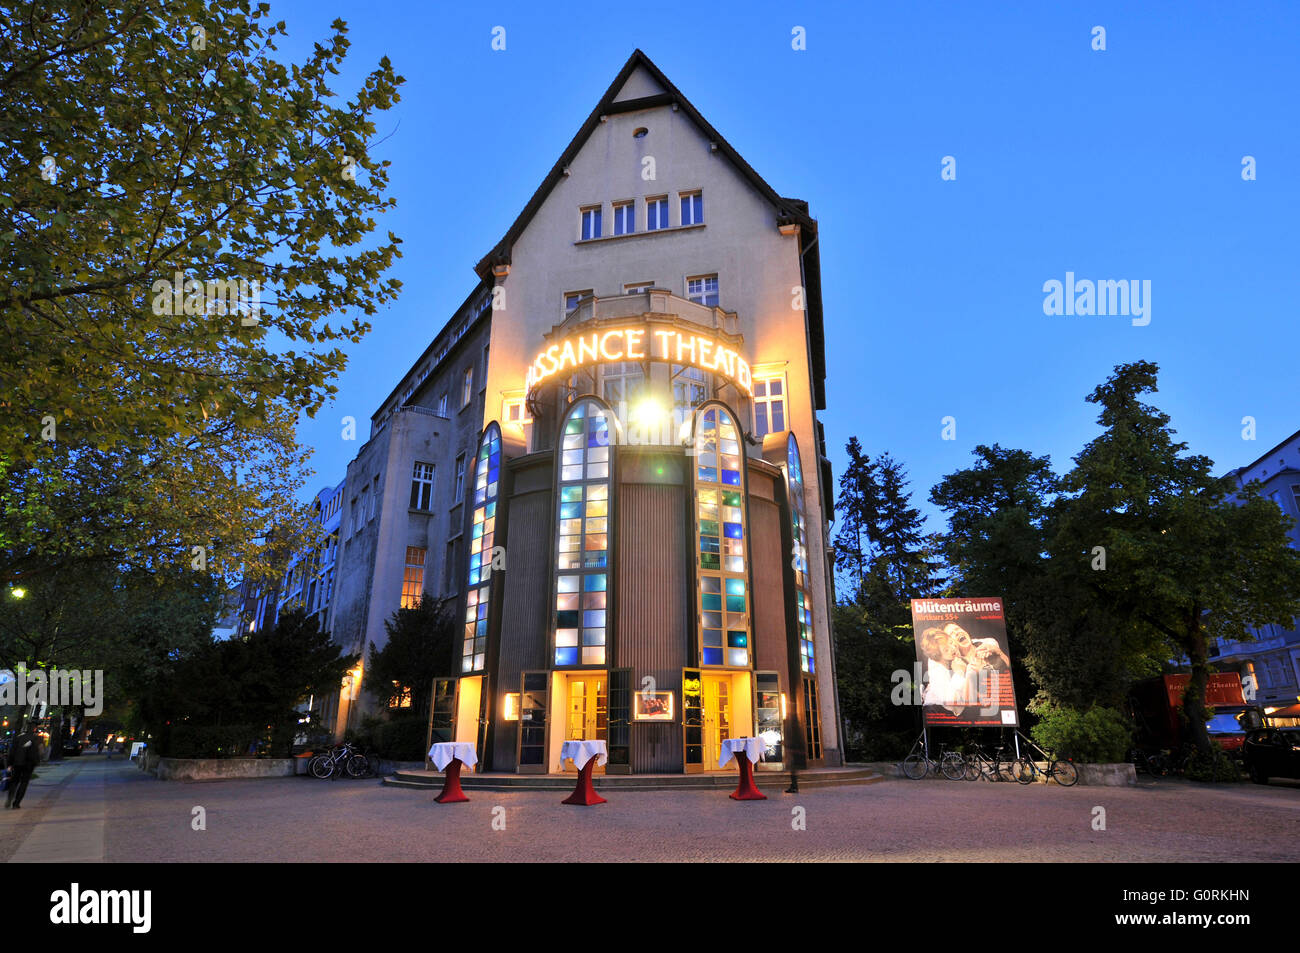 Renaissance Theater, Knesebeckstrasse, Charlottenburg, Berlin, Germany / Renaissance-Theater Stock Photo